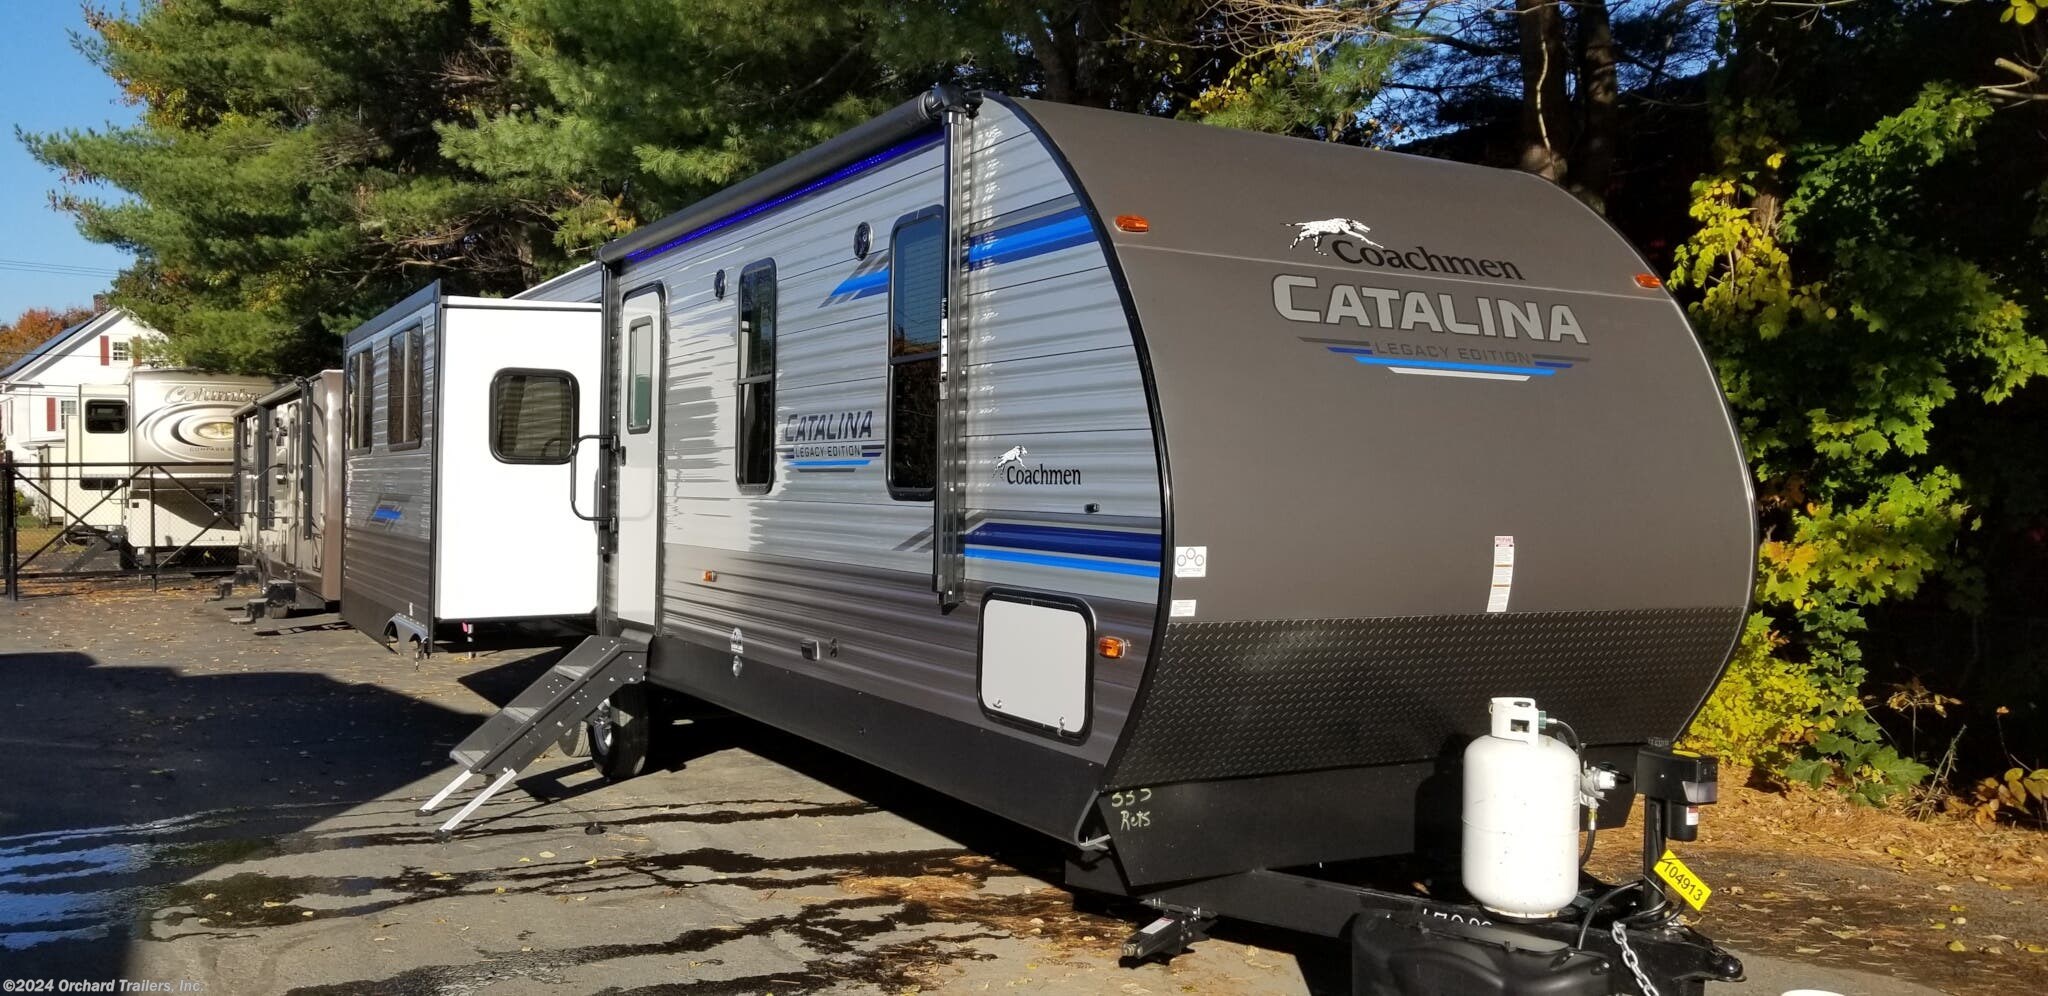 2020 catalina travel trailer